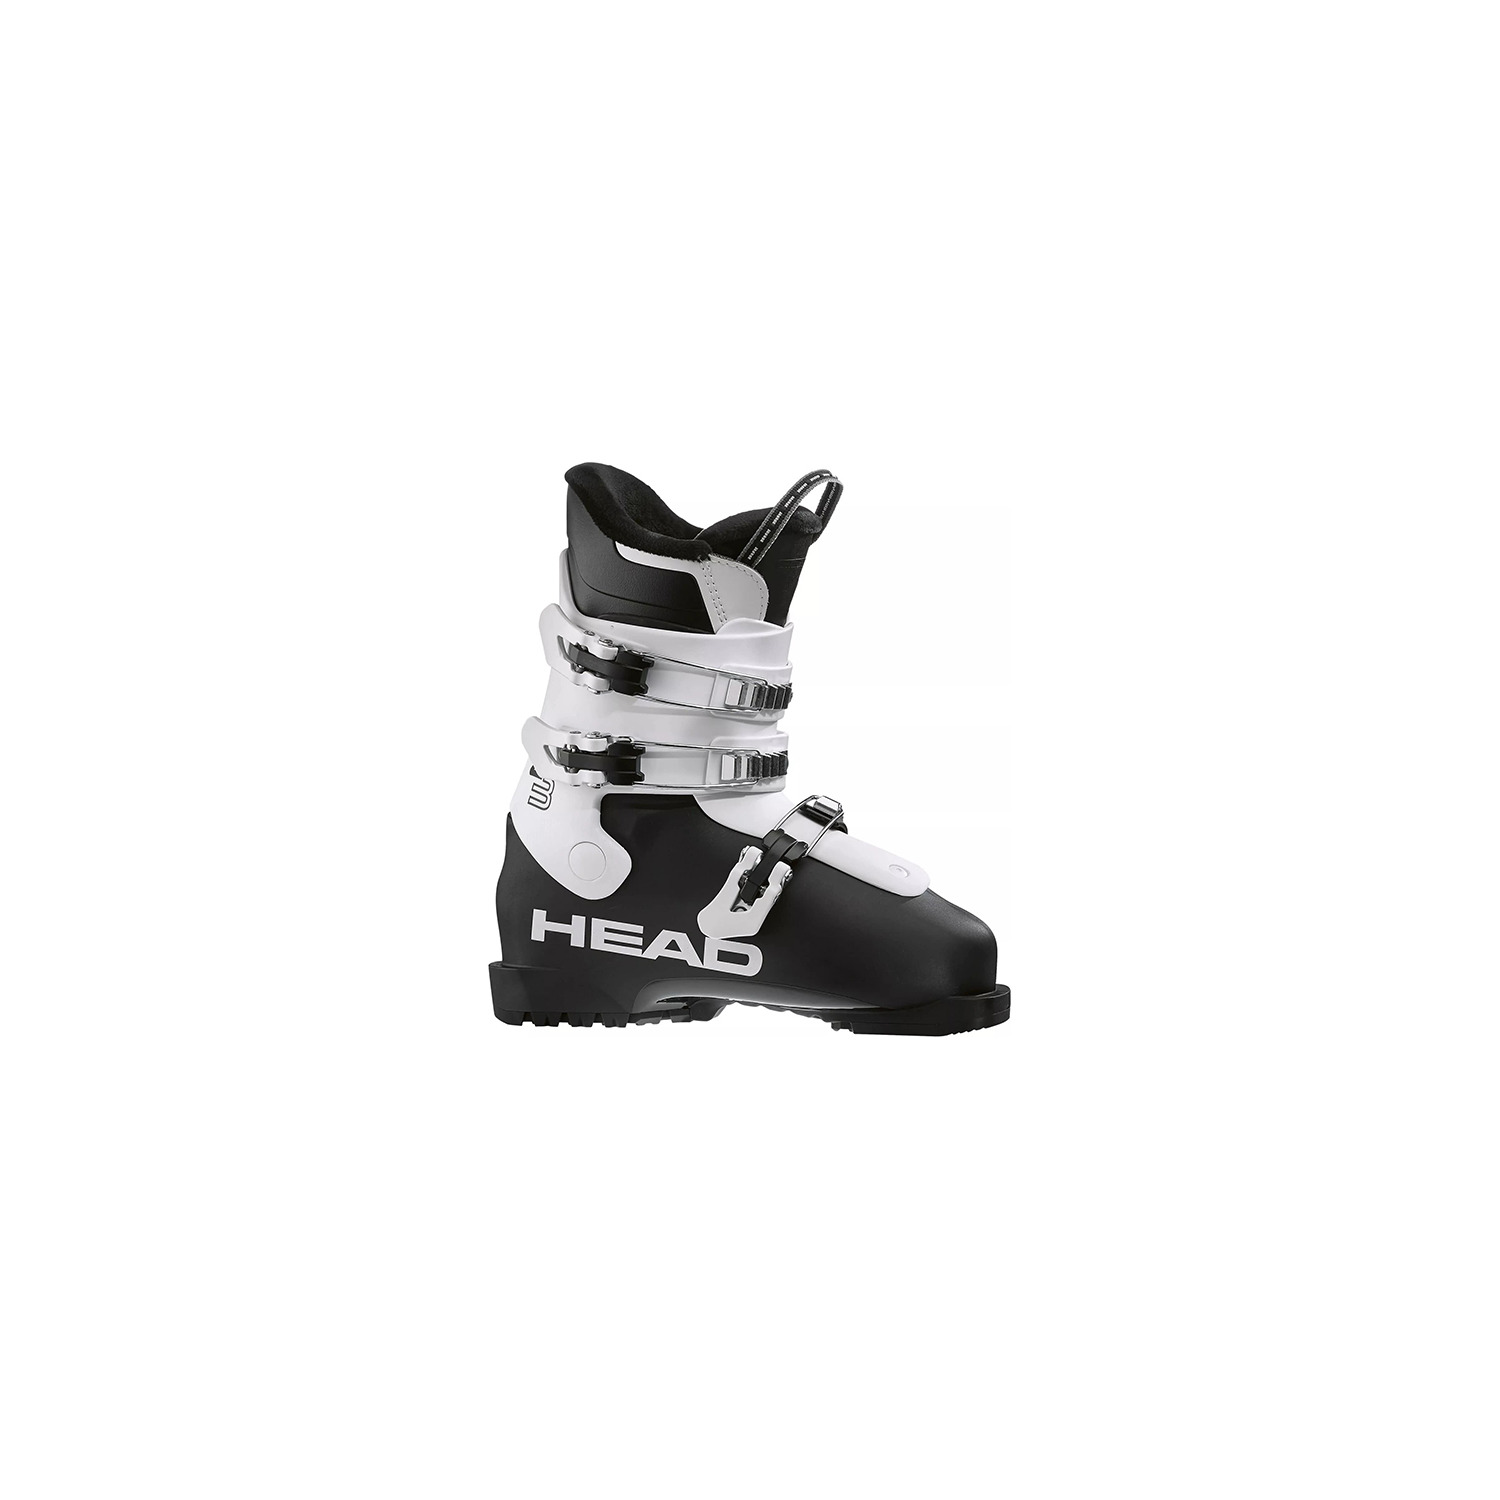 Горнолыжные ботинки Head Z3 Black/White 22/23, 24.5